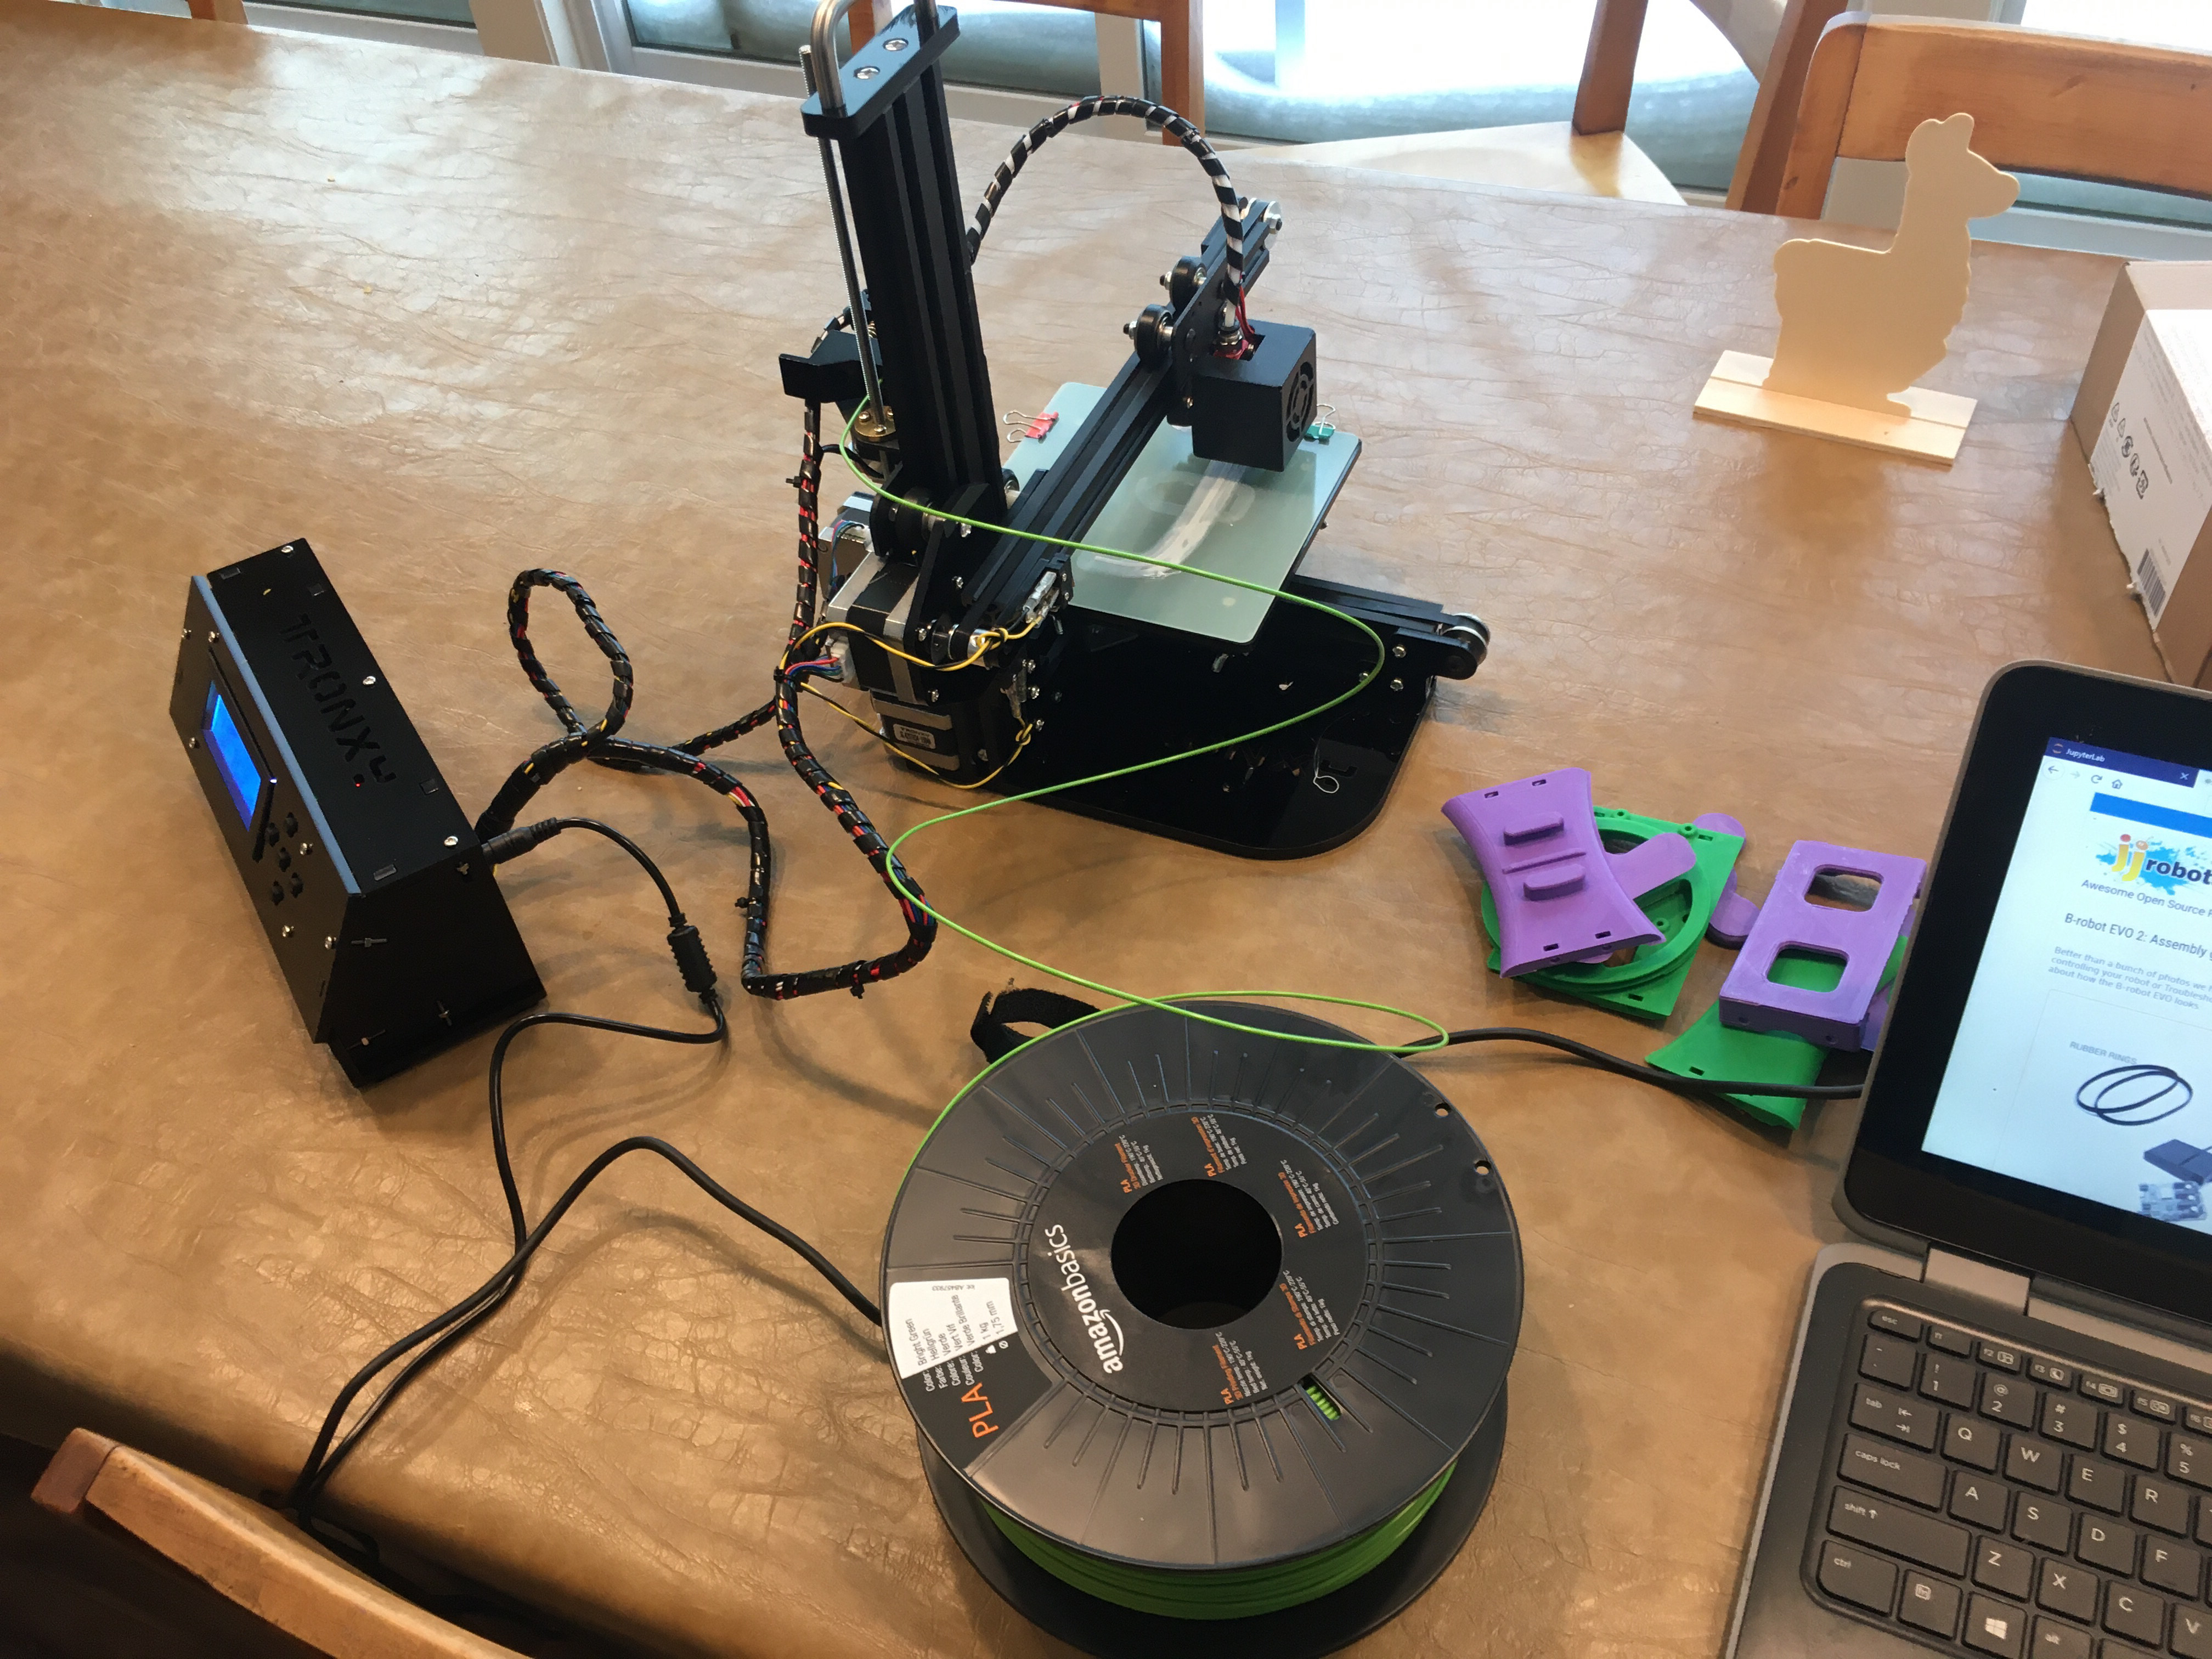 Printer and Robot Parts